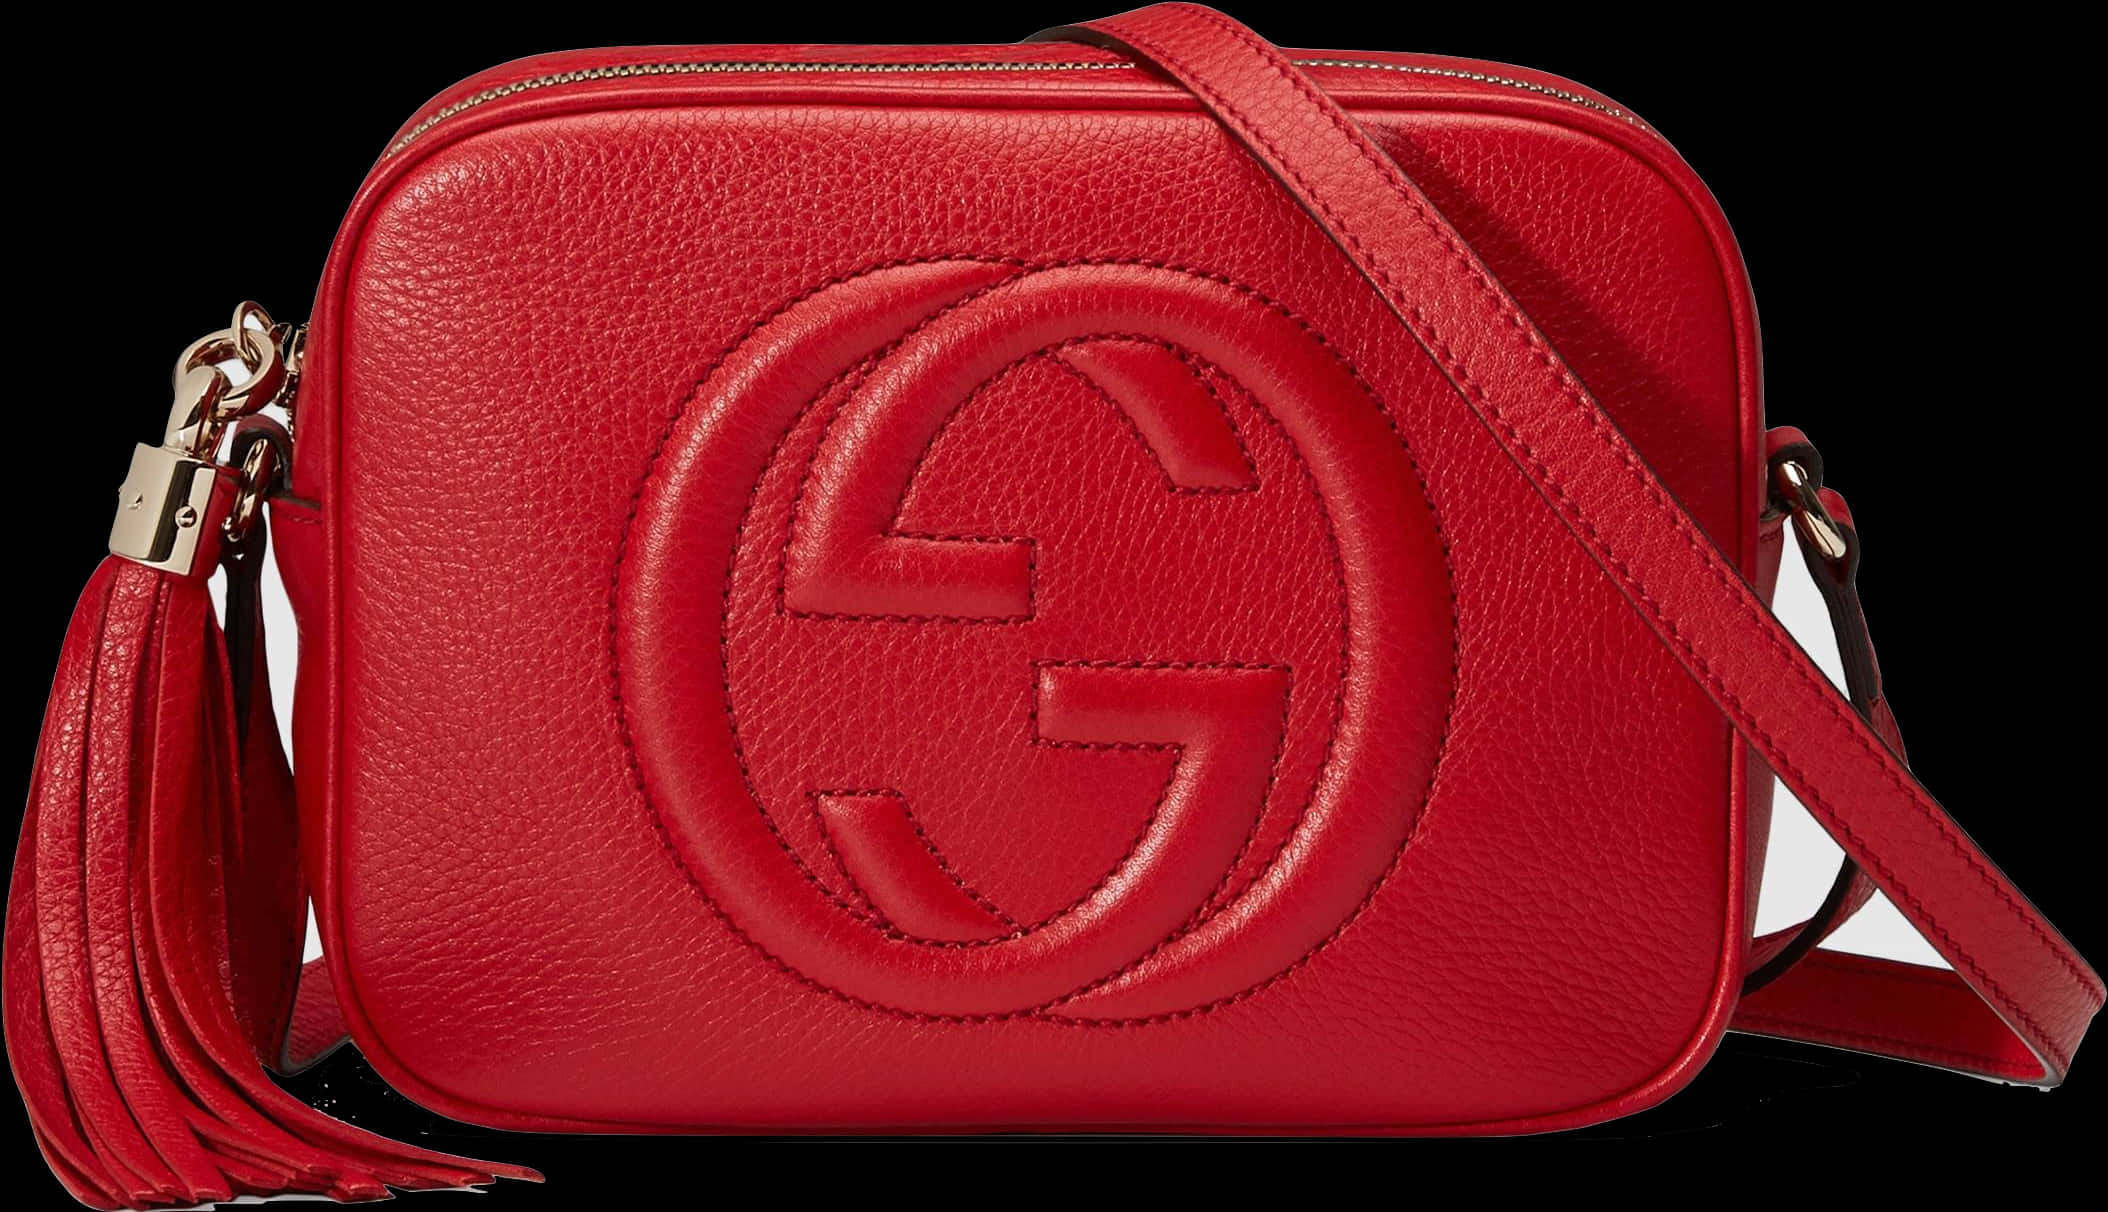 Red Gucci Handbag